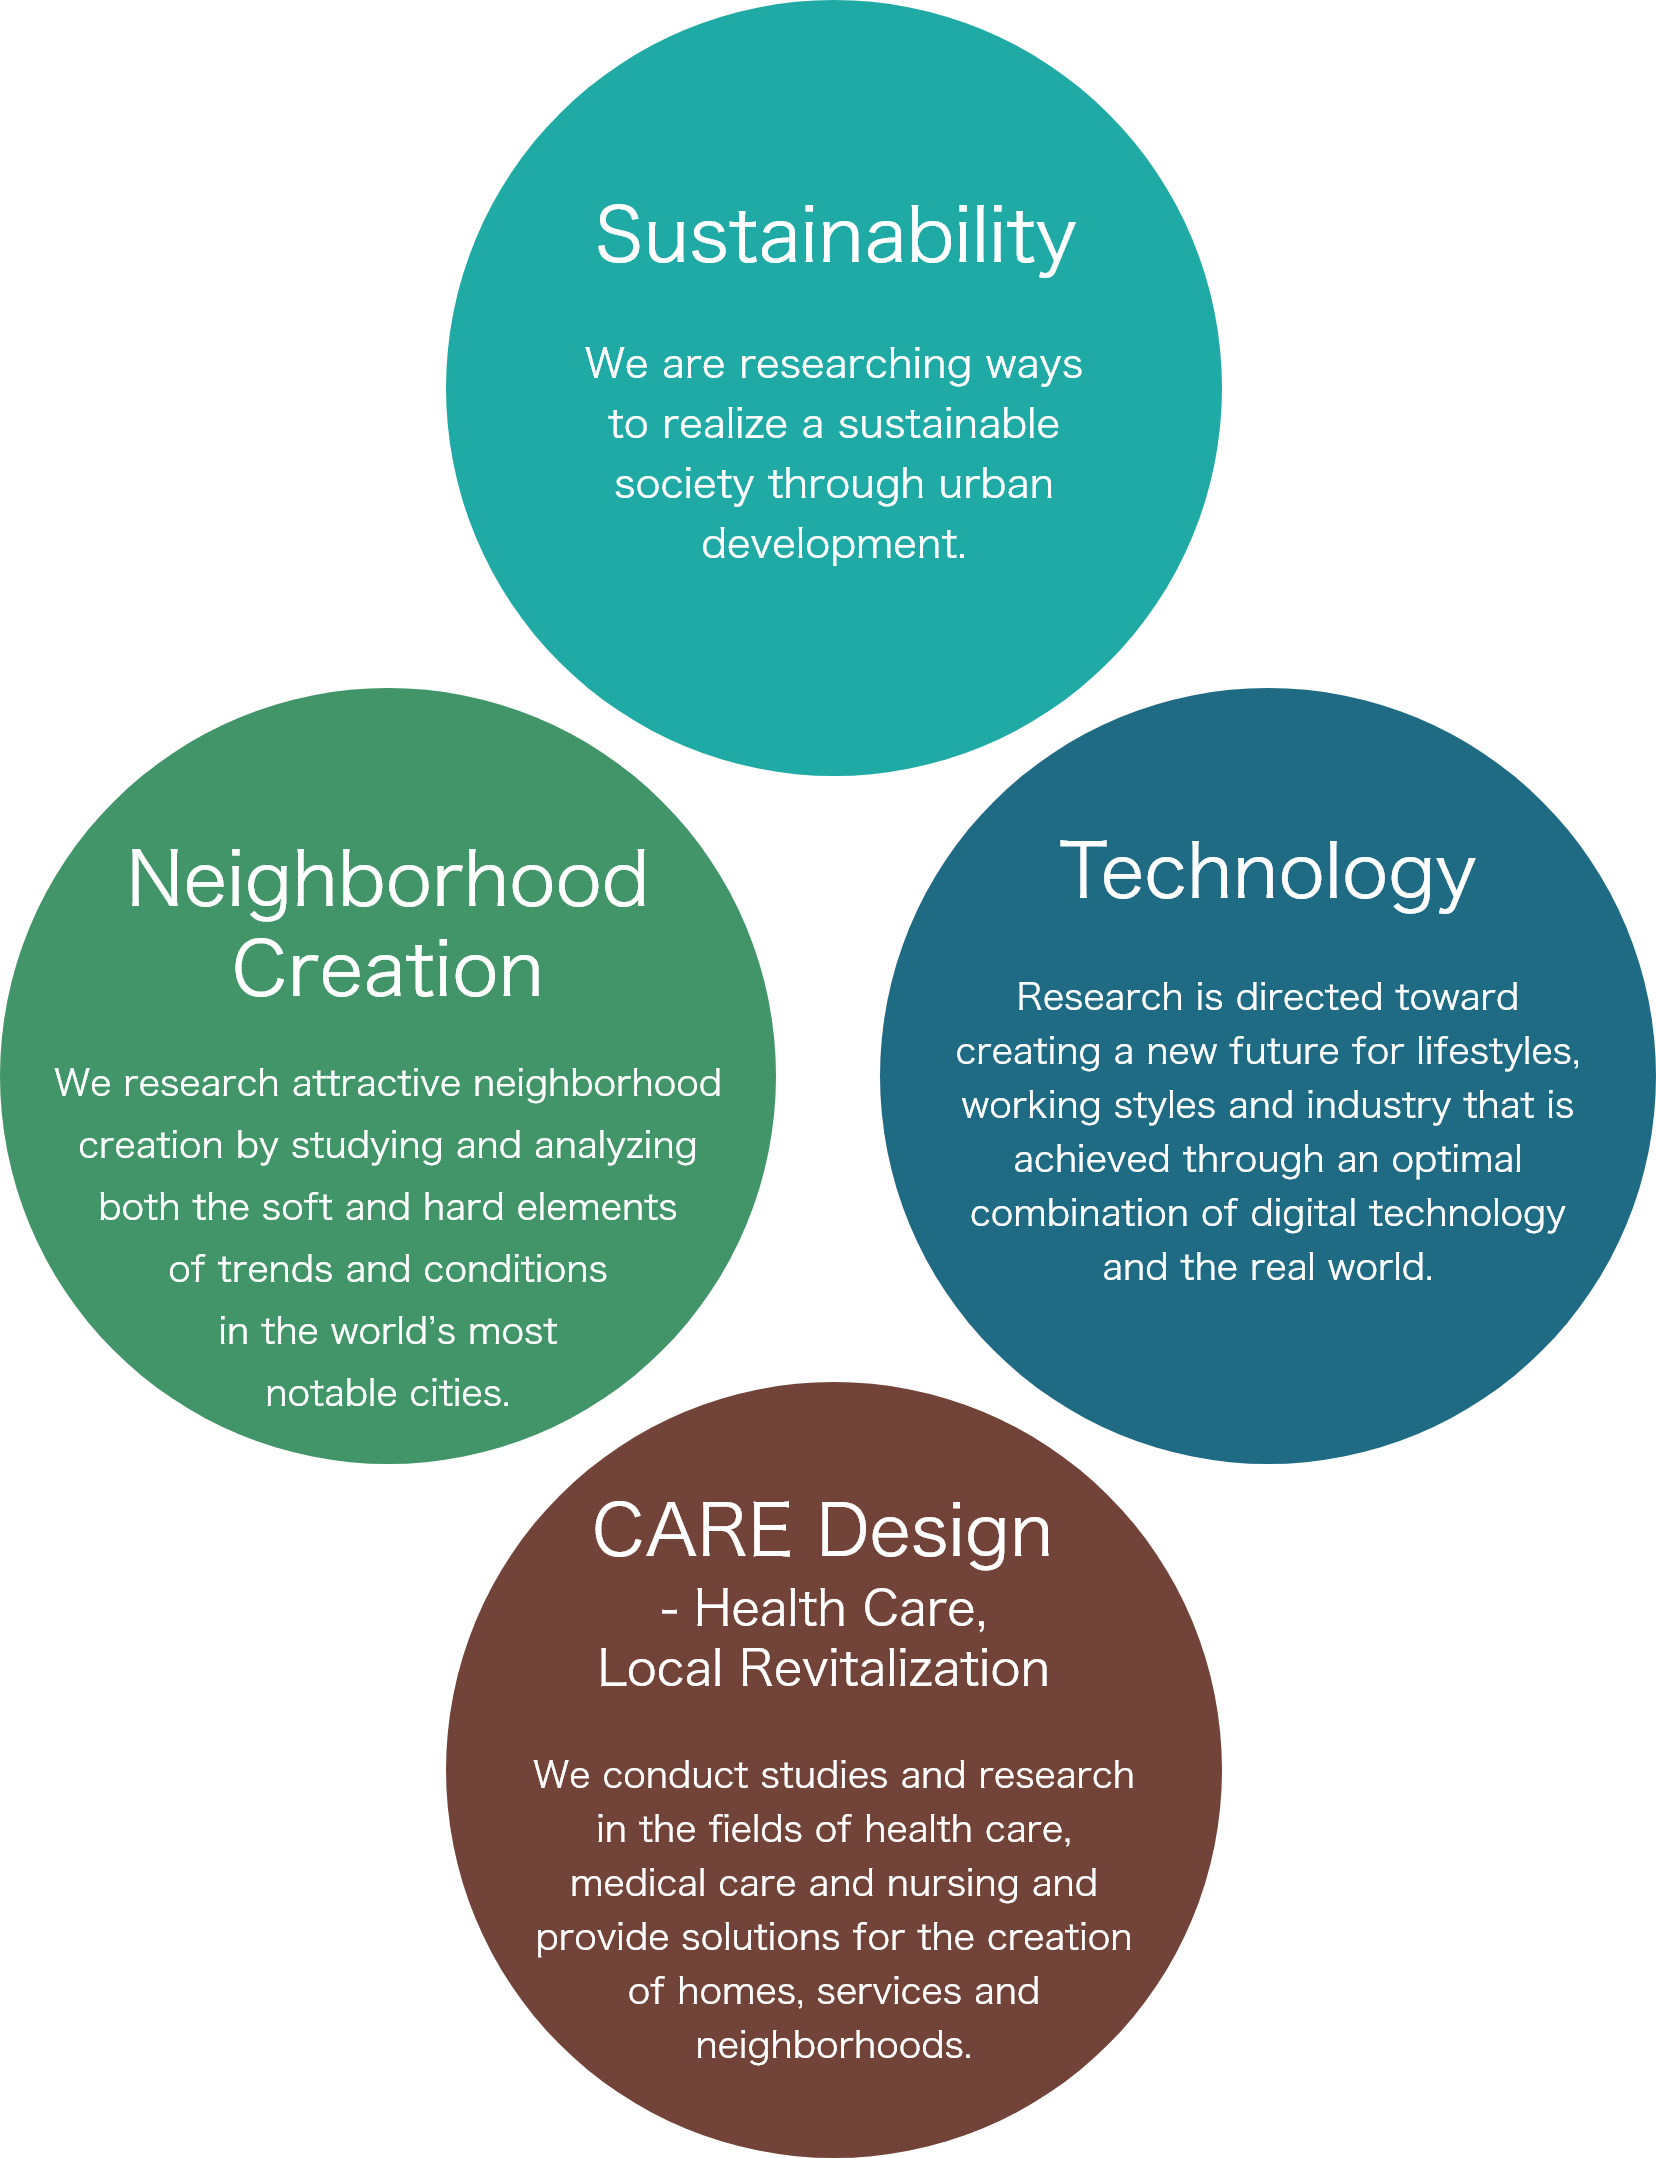 The Future, Local Revitalization,Care Design,Neighborhood Creation